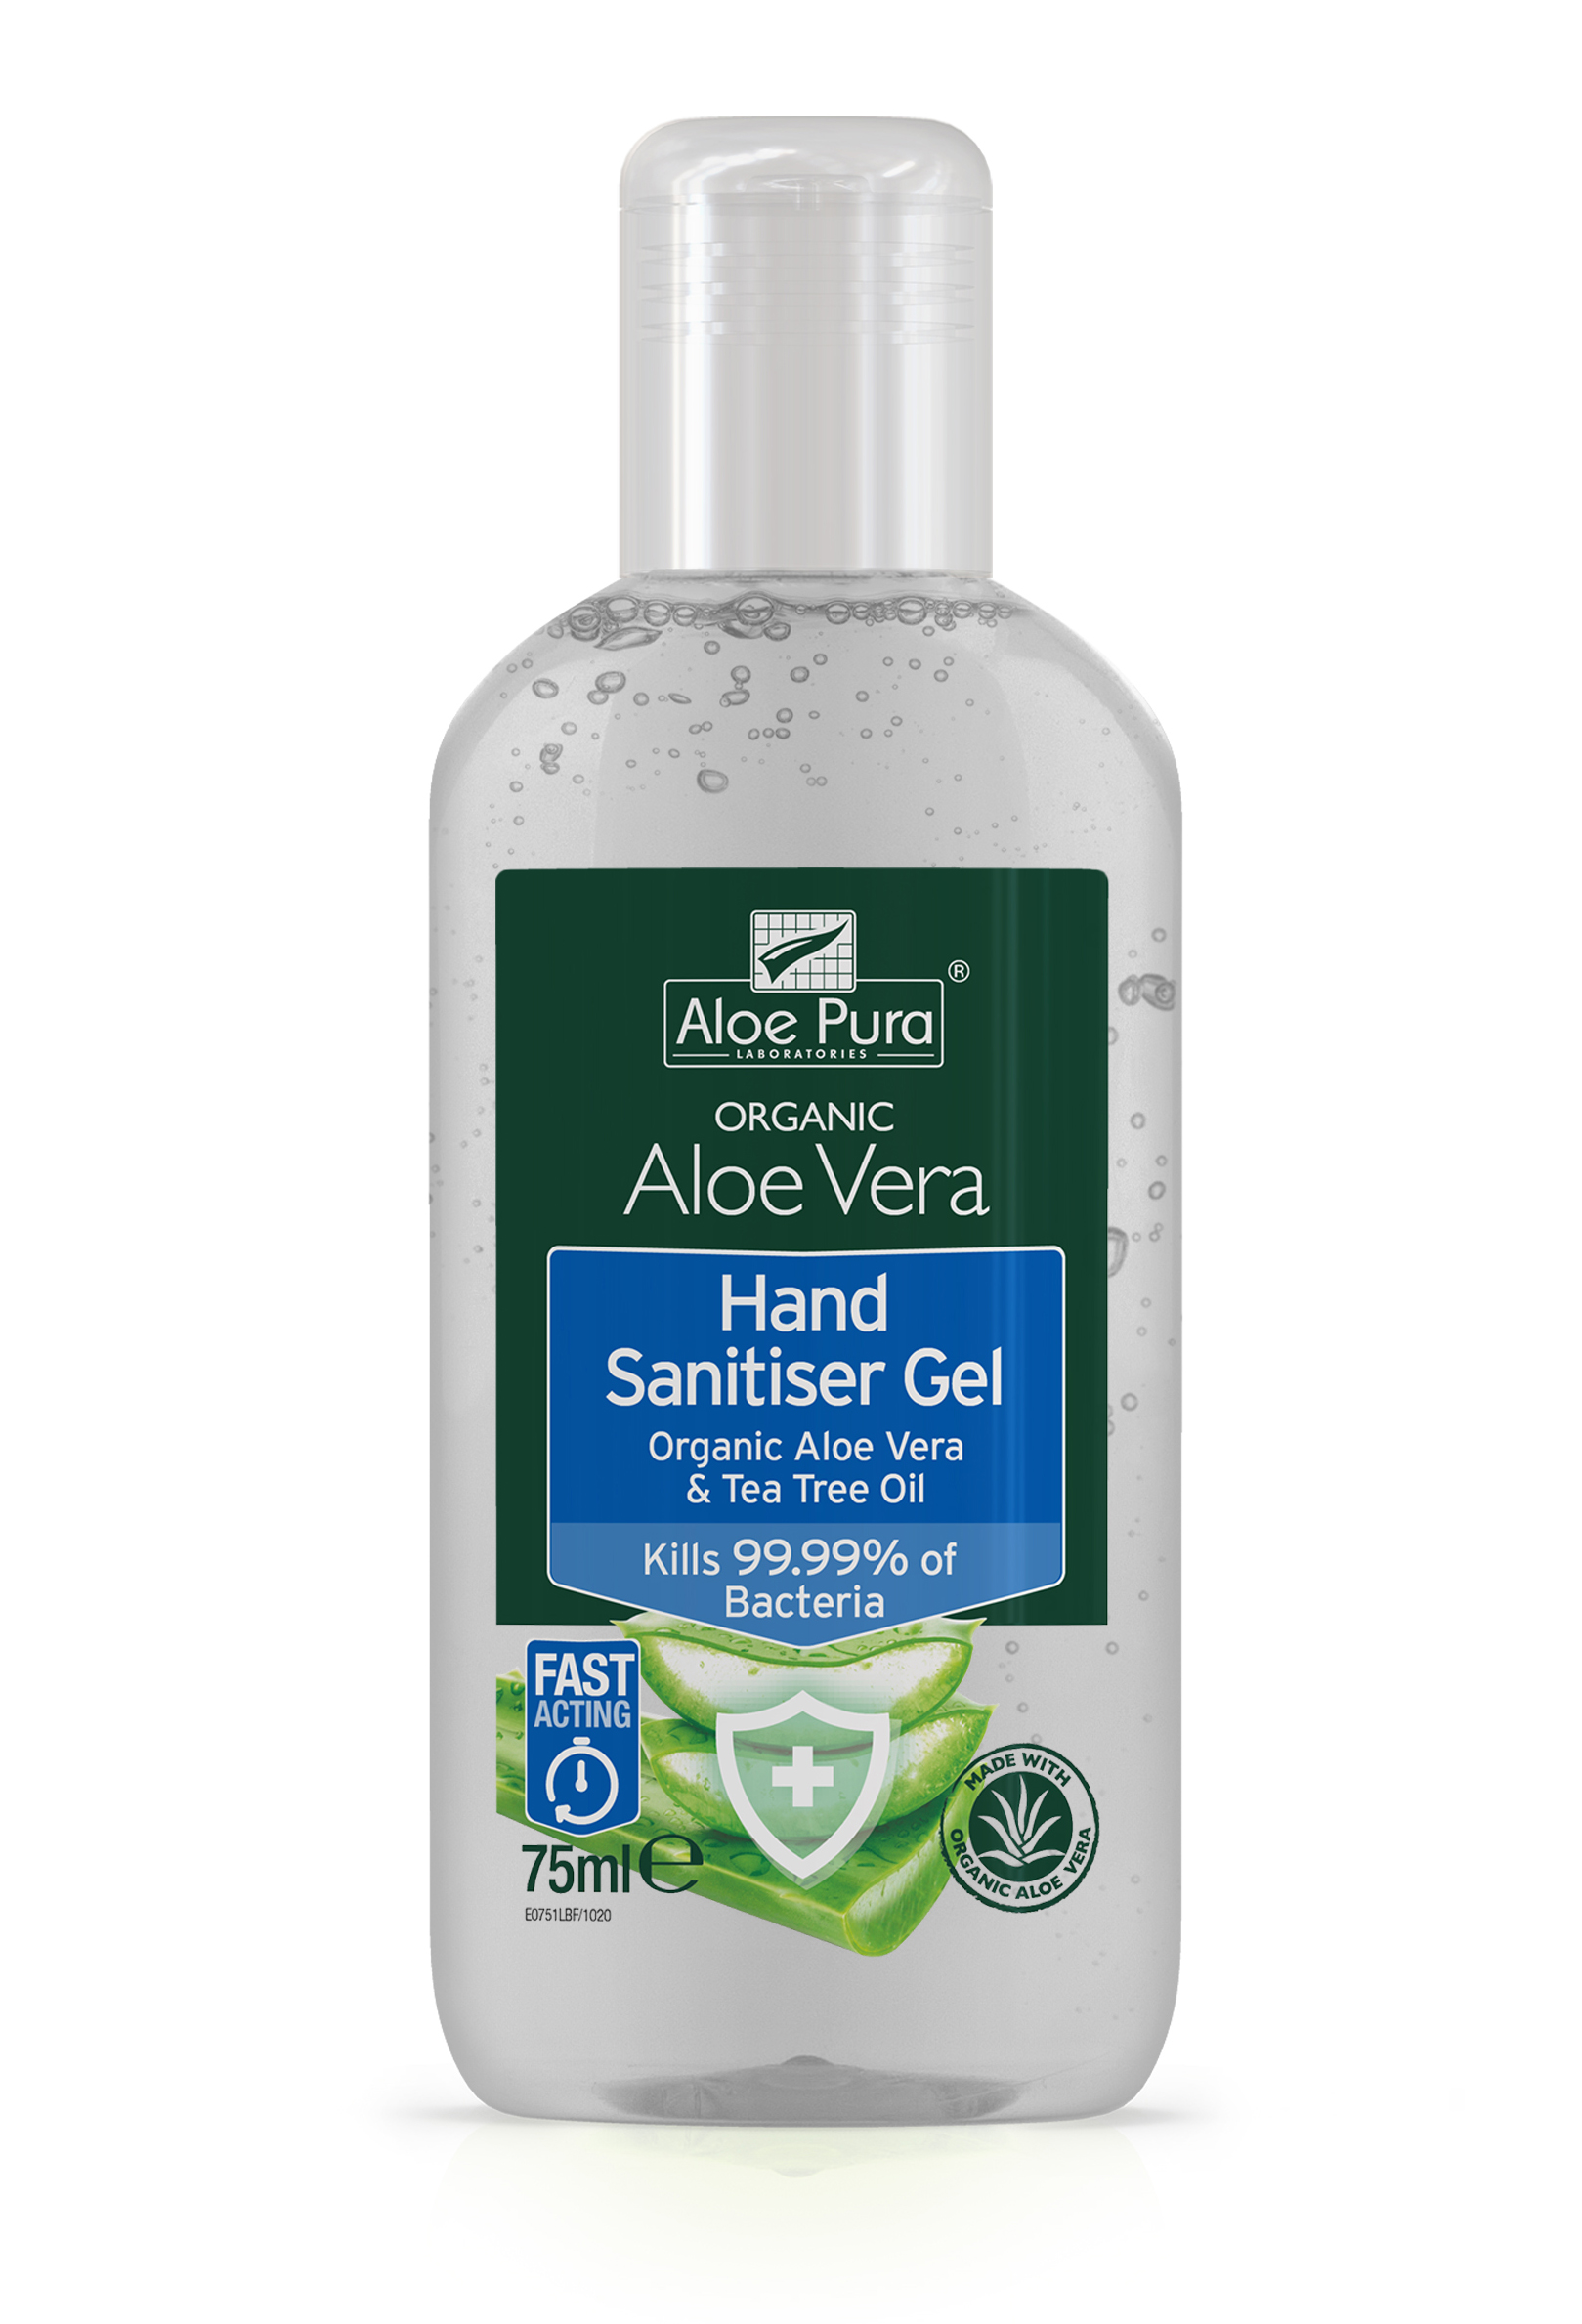 Aloe Pura Organic Aloe Vera Hand Sanitiser Gel